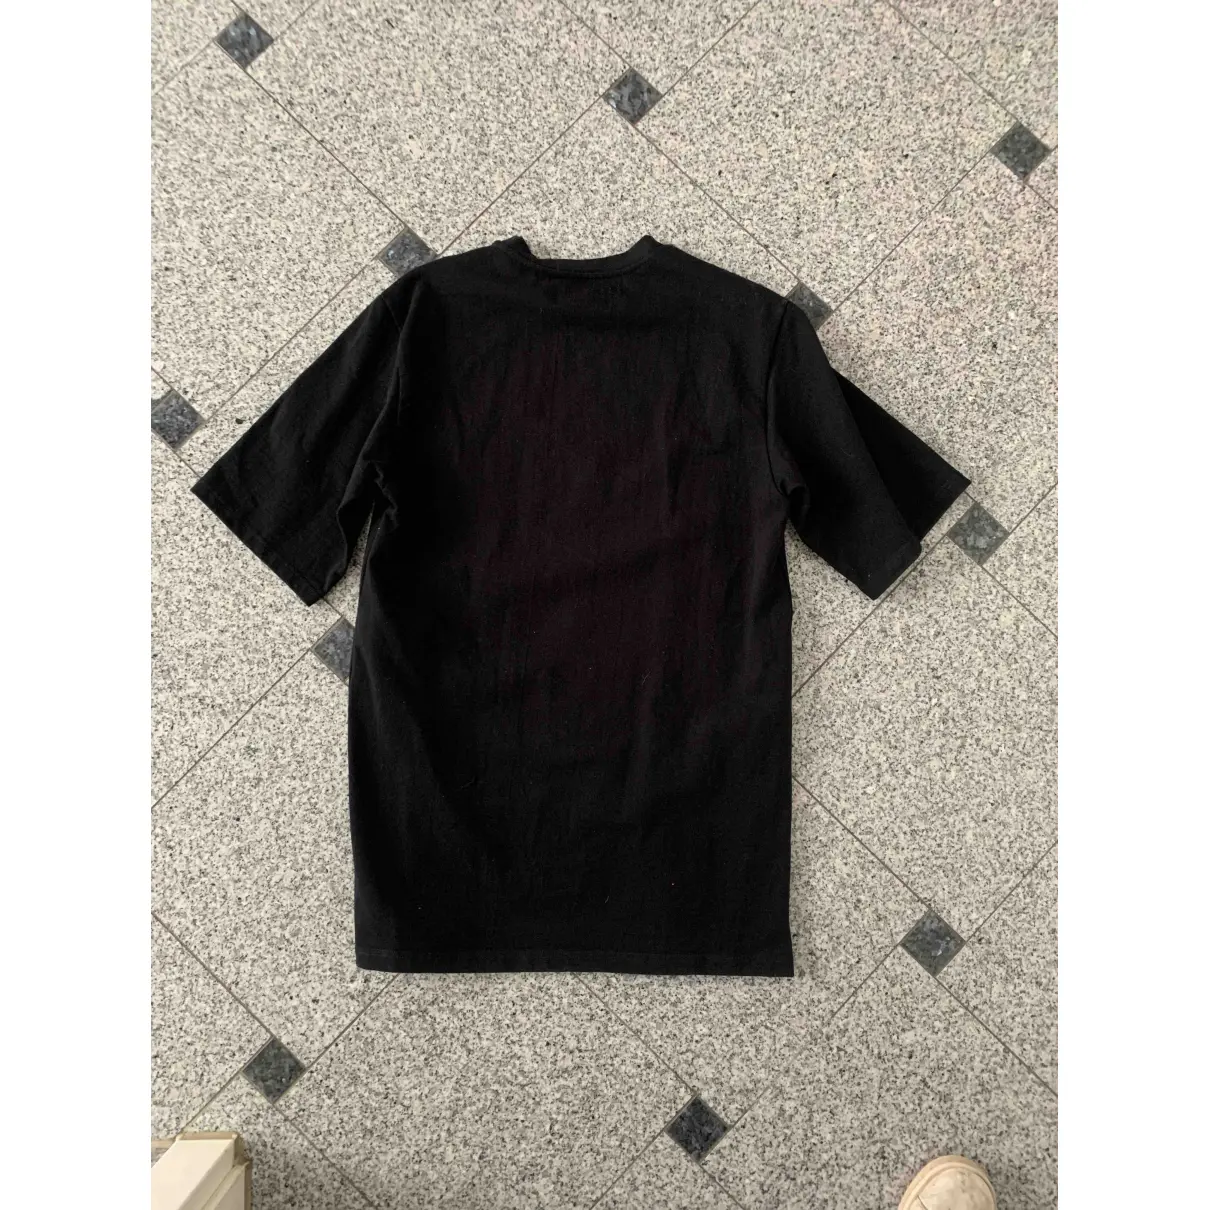 Buy Misbhv Black Cotton T-shirt online